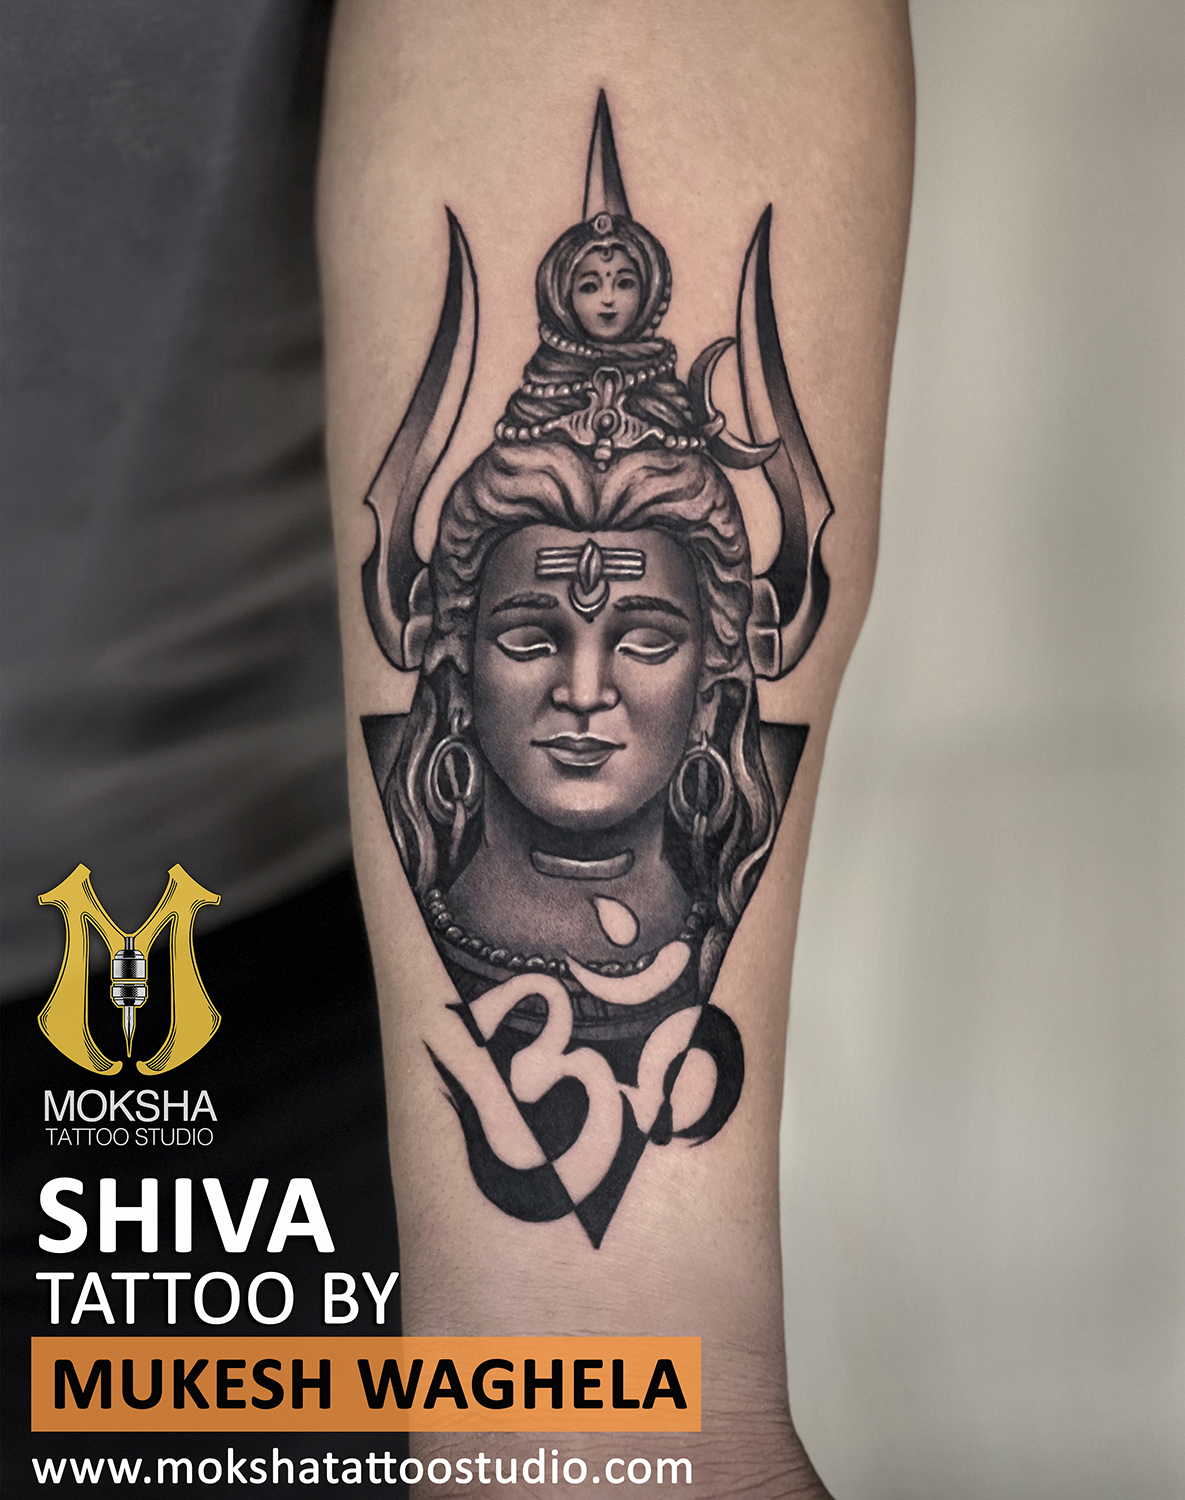 Shiva Tattoo by Mukesh Waghela The Best Tattoo Artist In Goa At Moksha Tattoo Studio Goa India. - Best Tattoo Studio Goa, Safe, Hygienic - Moksha Tattoo